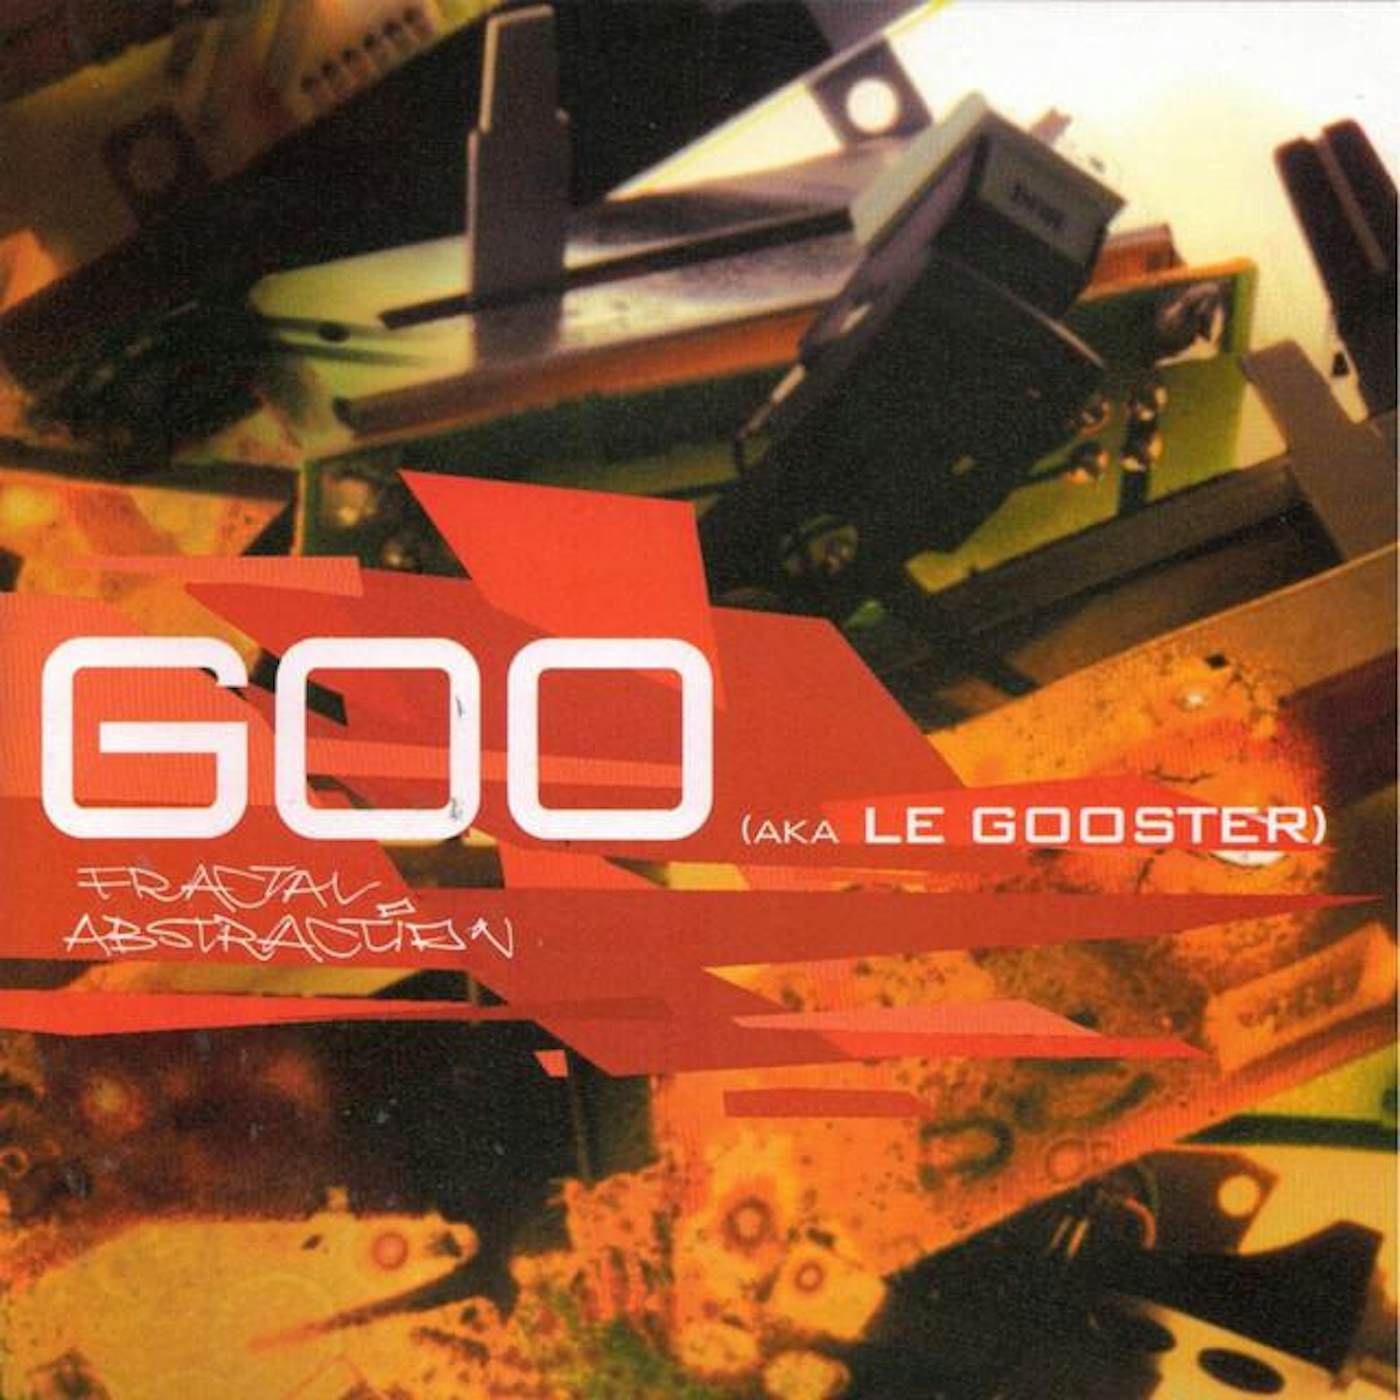 Goo (aka Le Gooster)